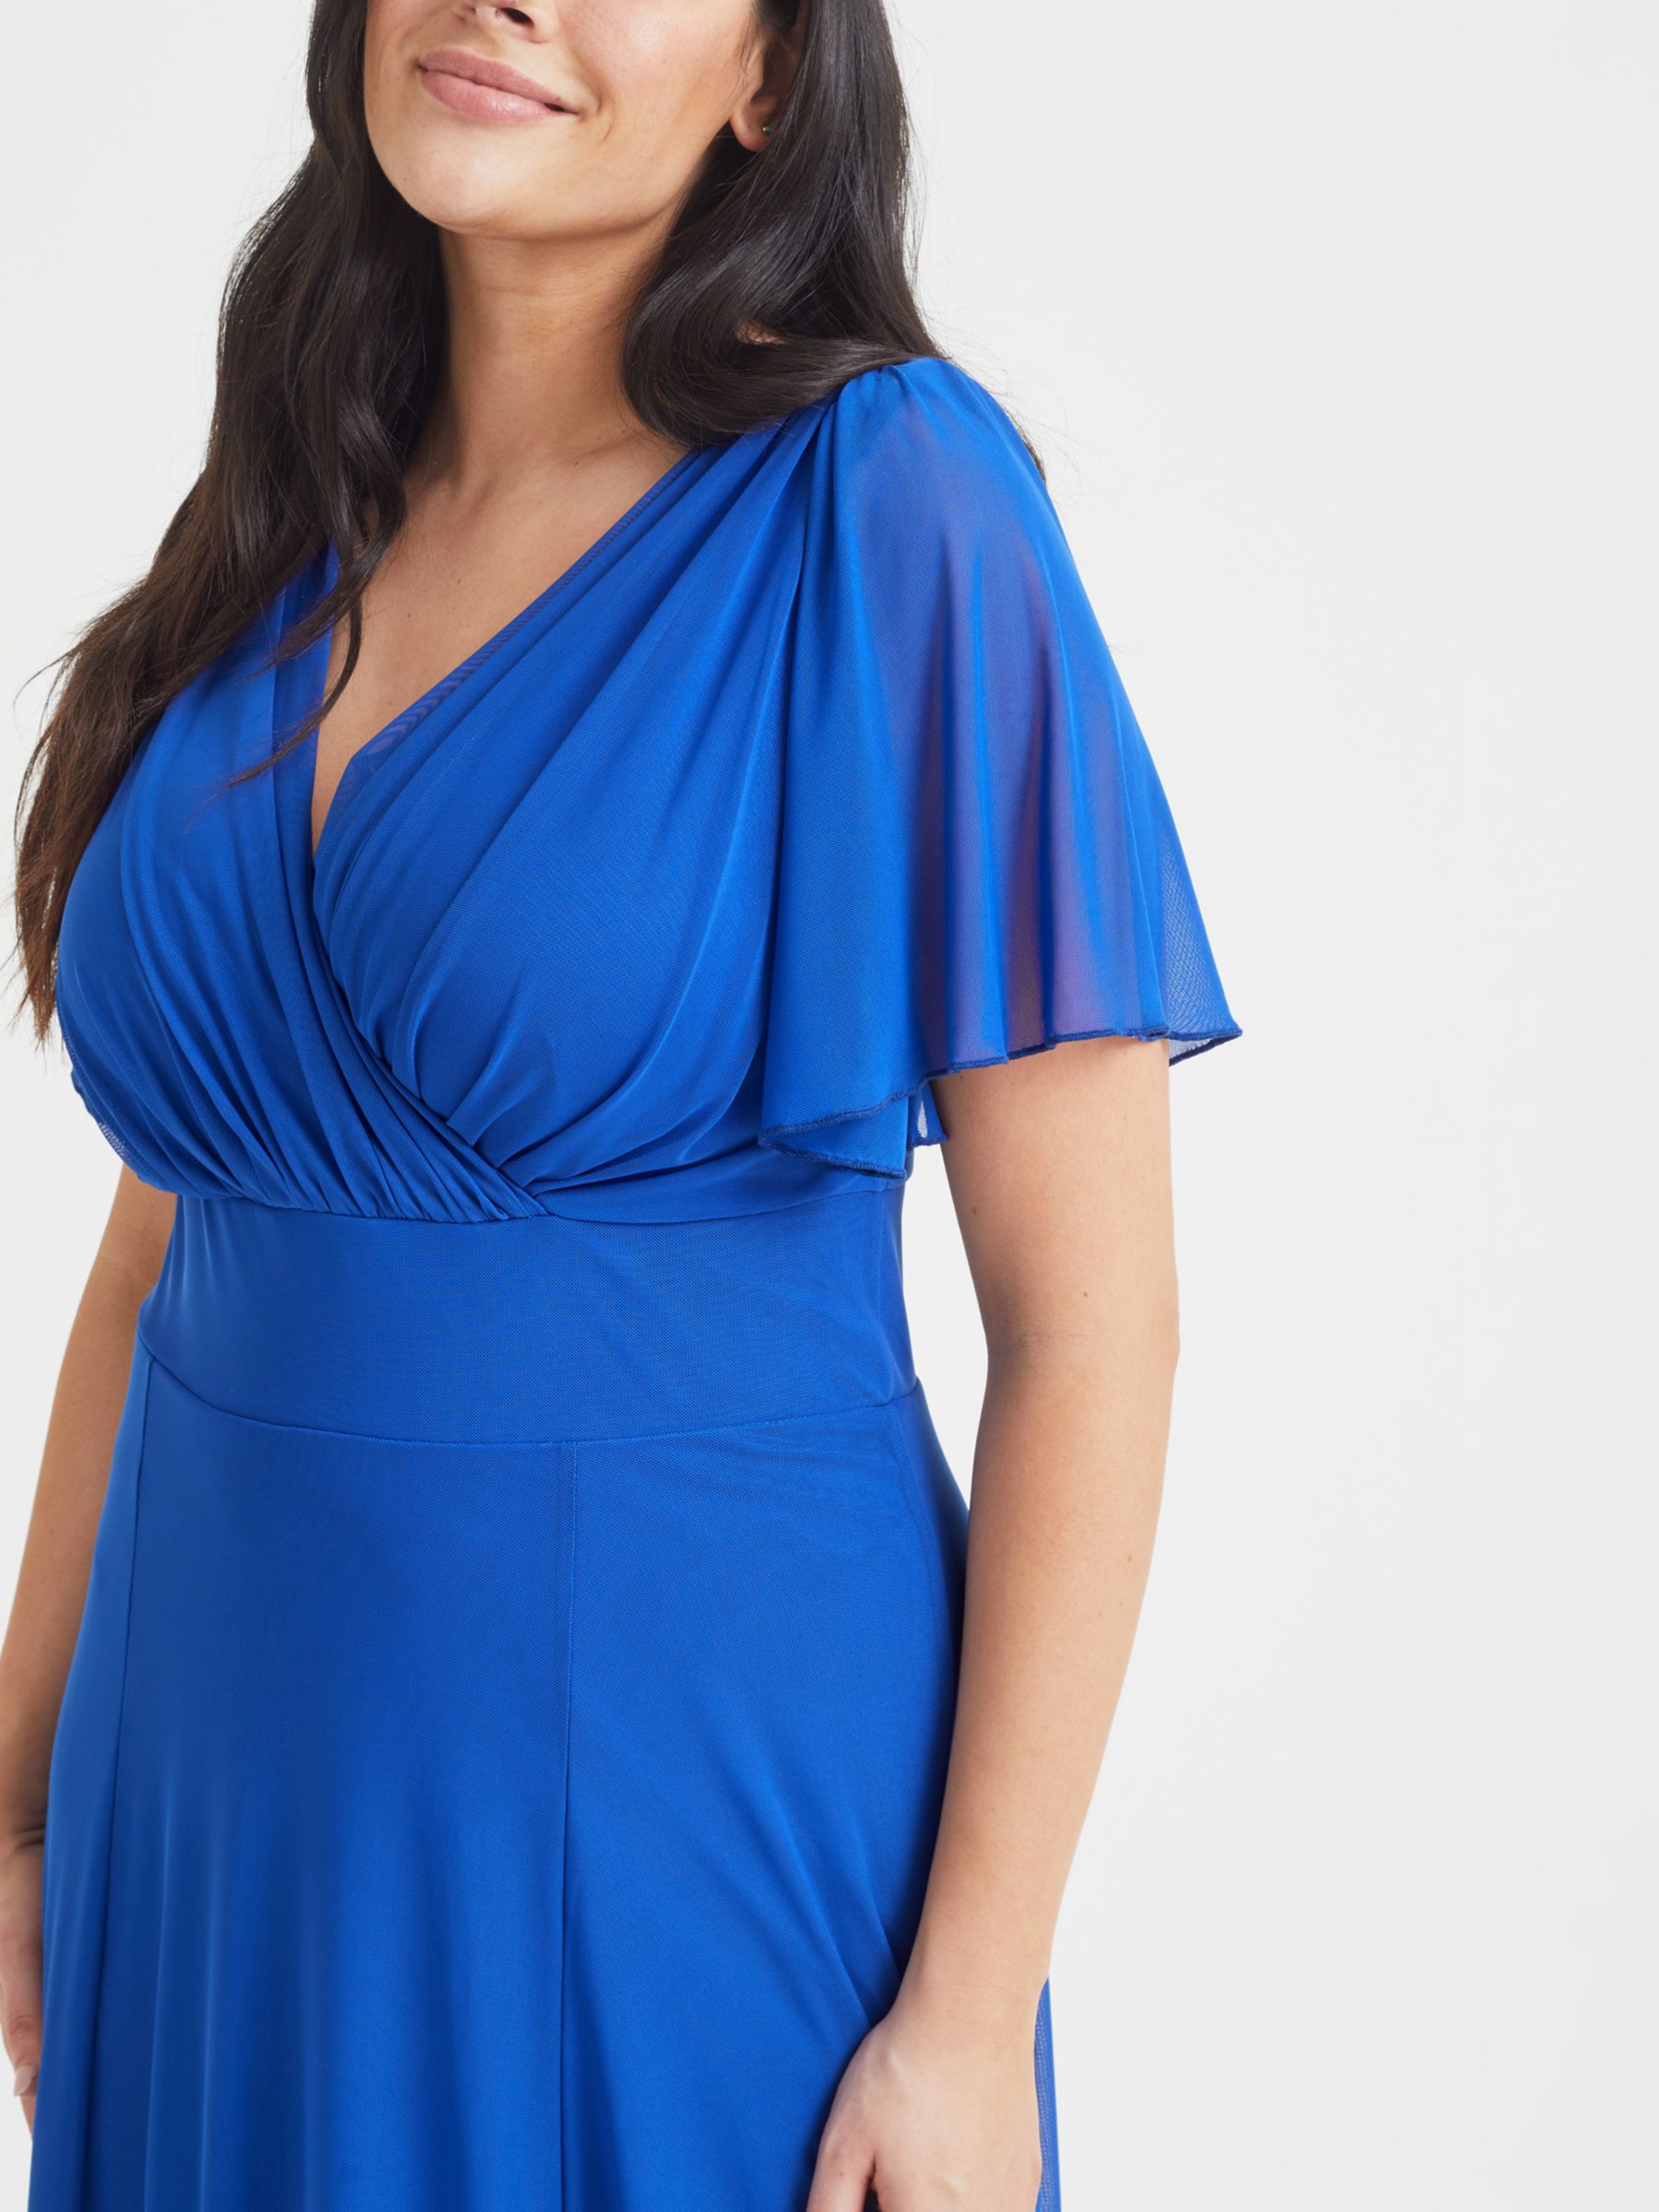 Buy Scarlett & Jo Isabelle Solid Blue Maxi Dress Online at johnlewis.com